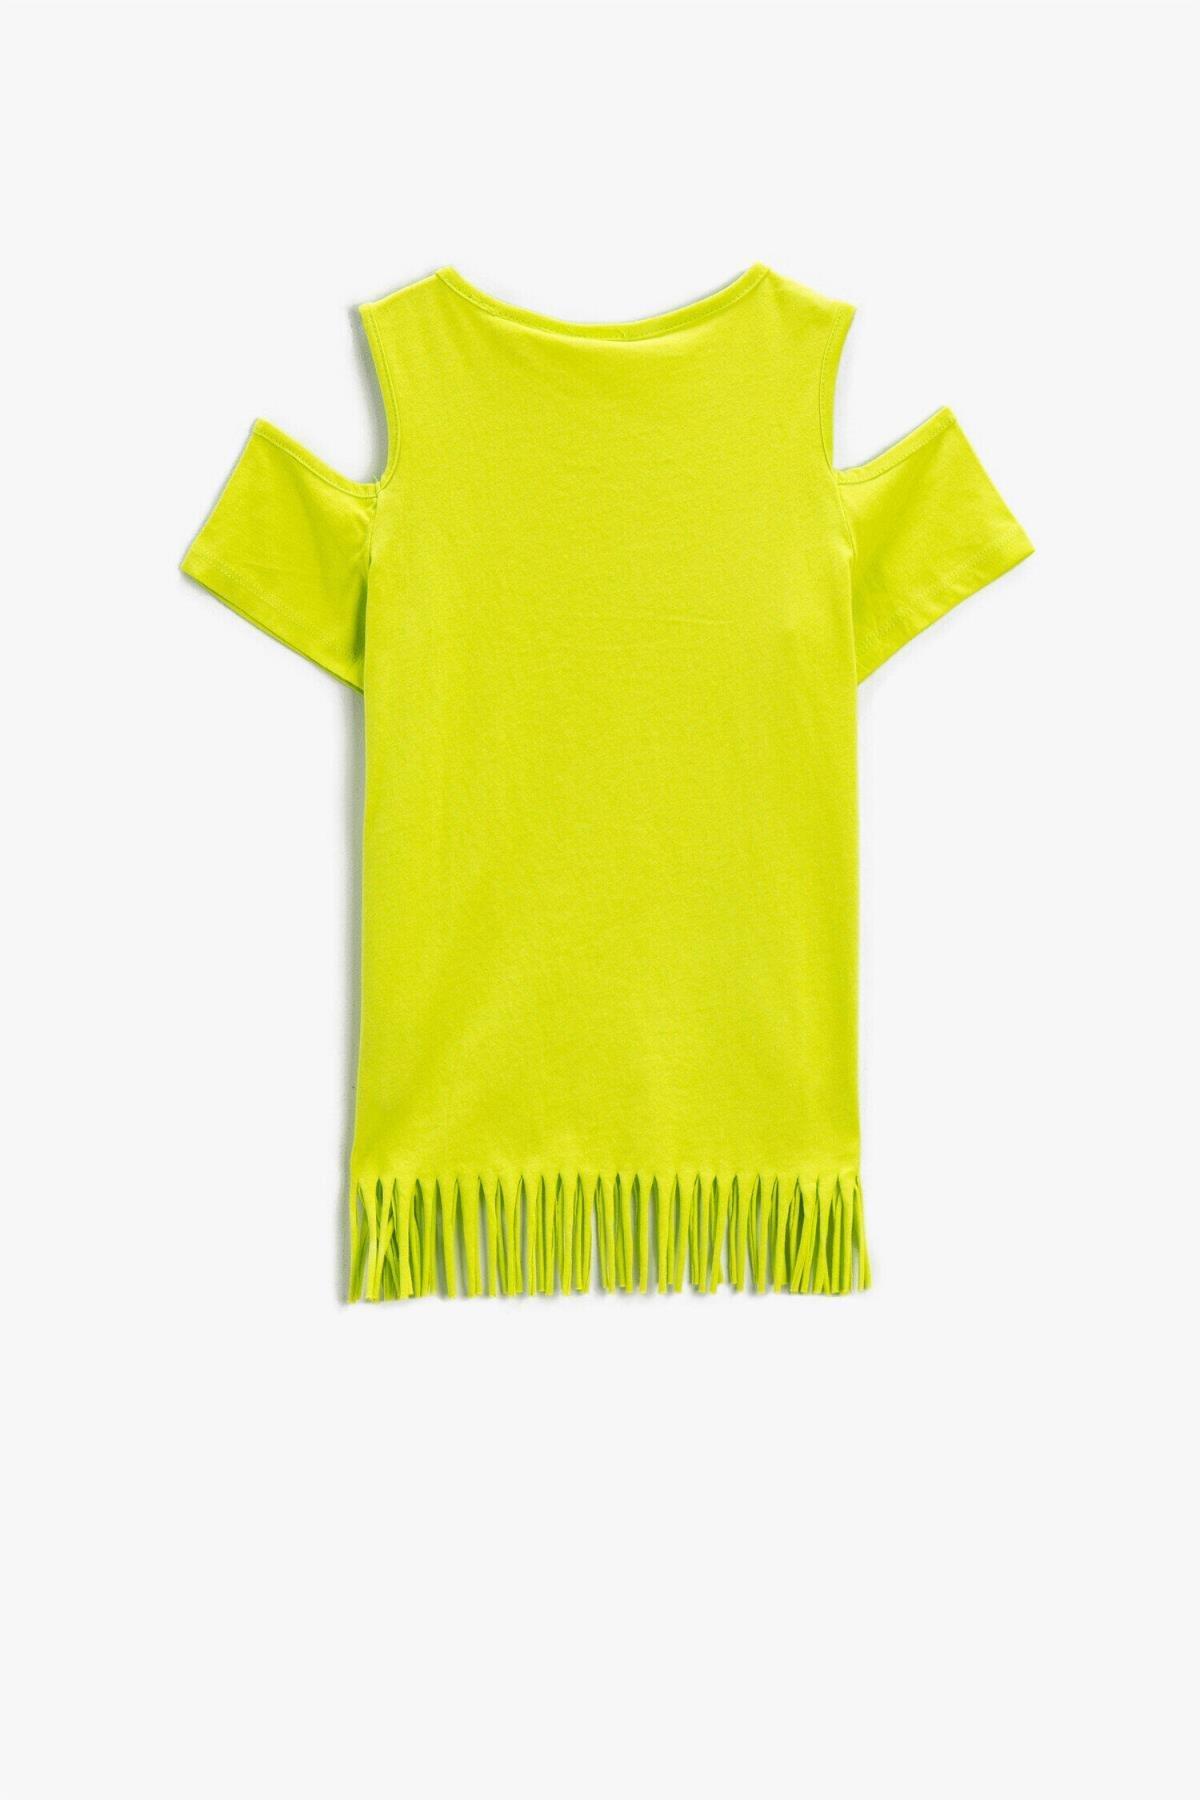 Koton - Yellow Printed Cotton T-Shirt